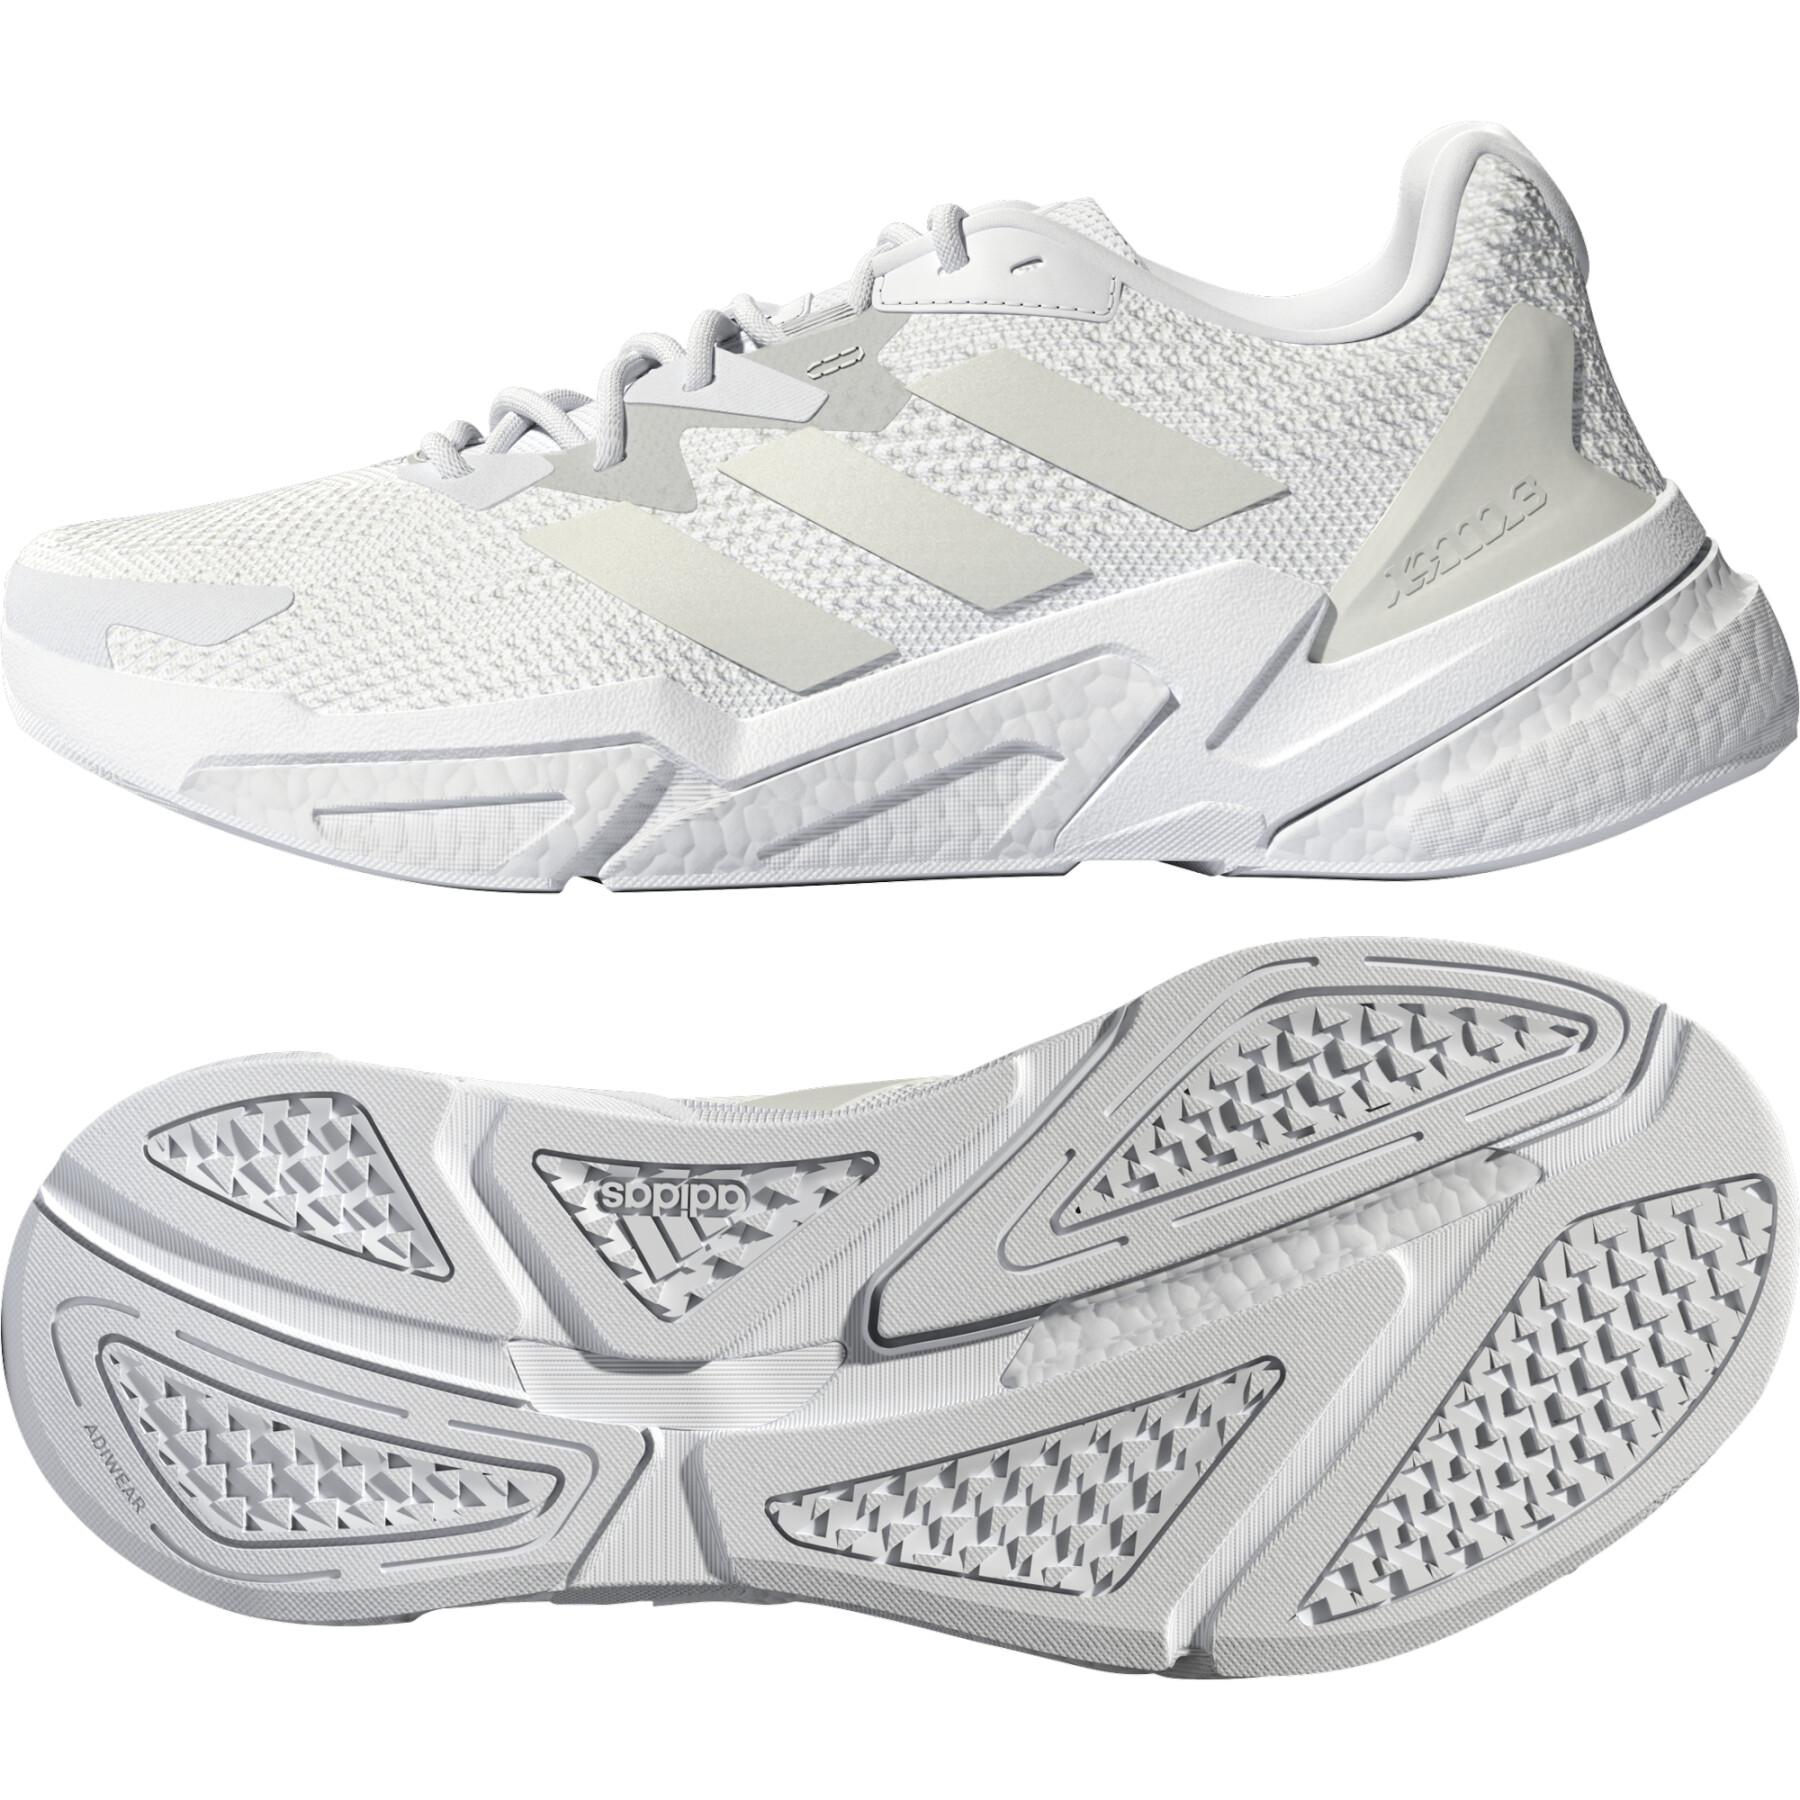 Chaussures de running femme adidas X9000L3 - Chaussures - Running -  Entretien physique